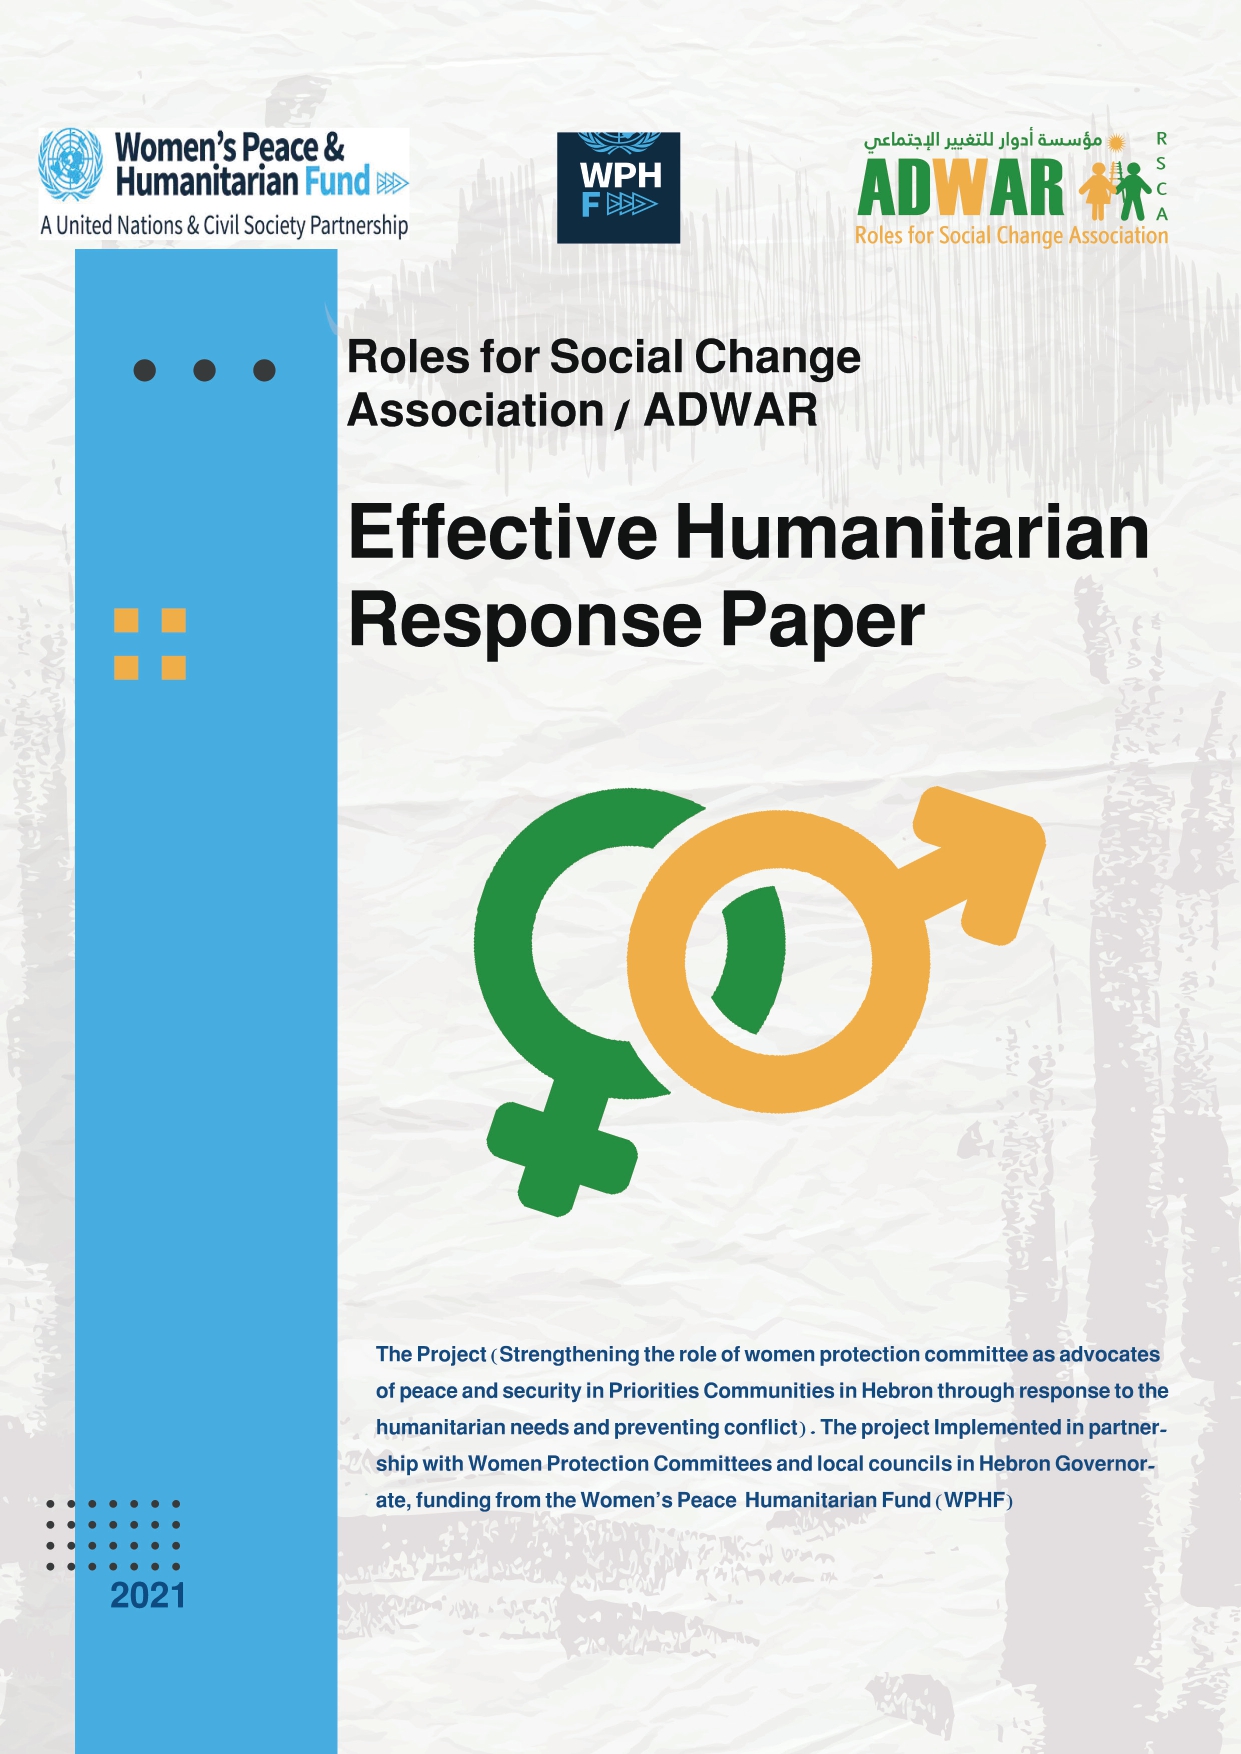  Effective Humanitarian Response Paper